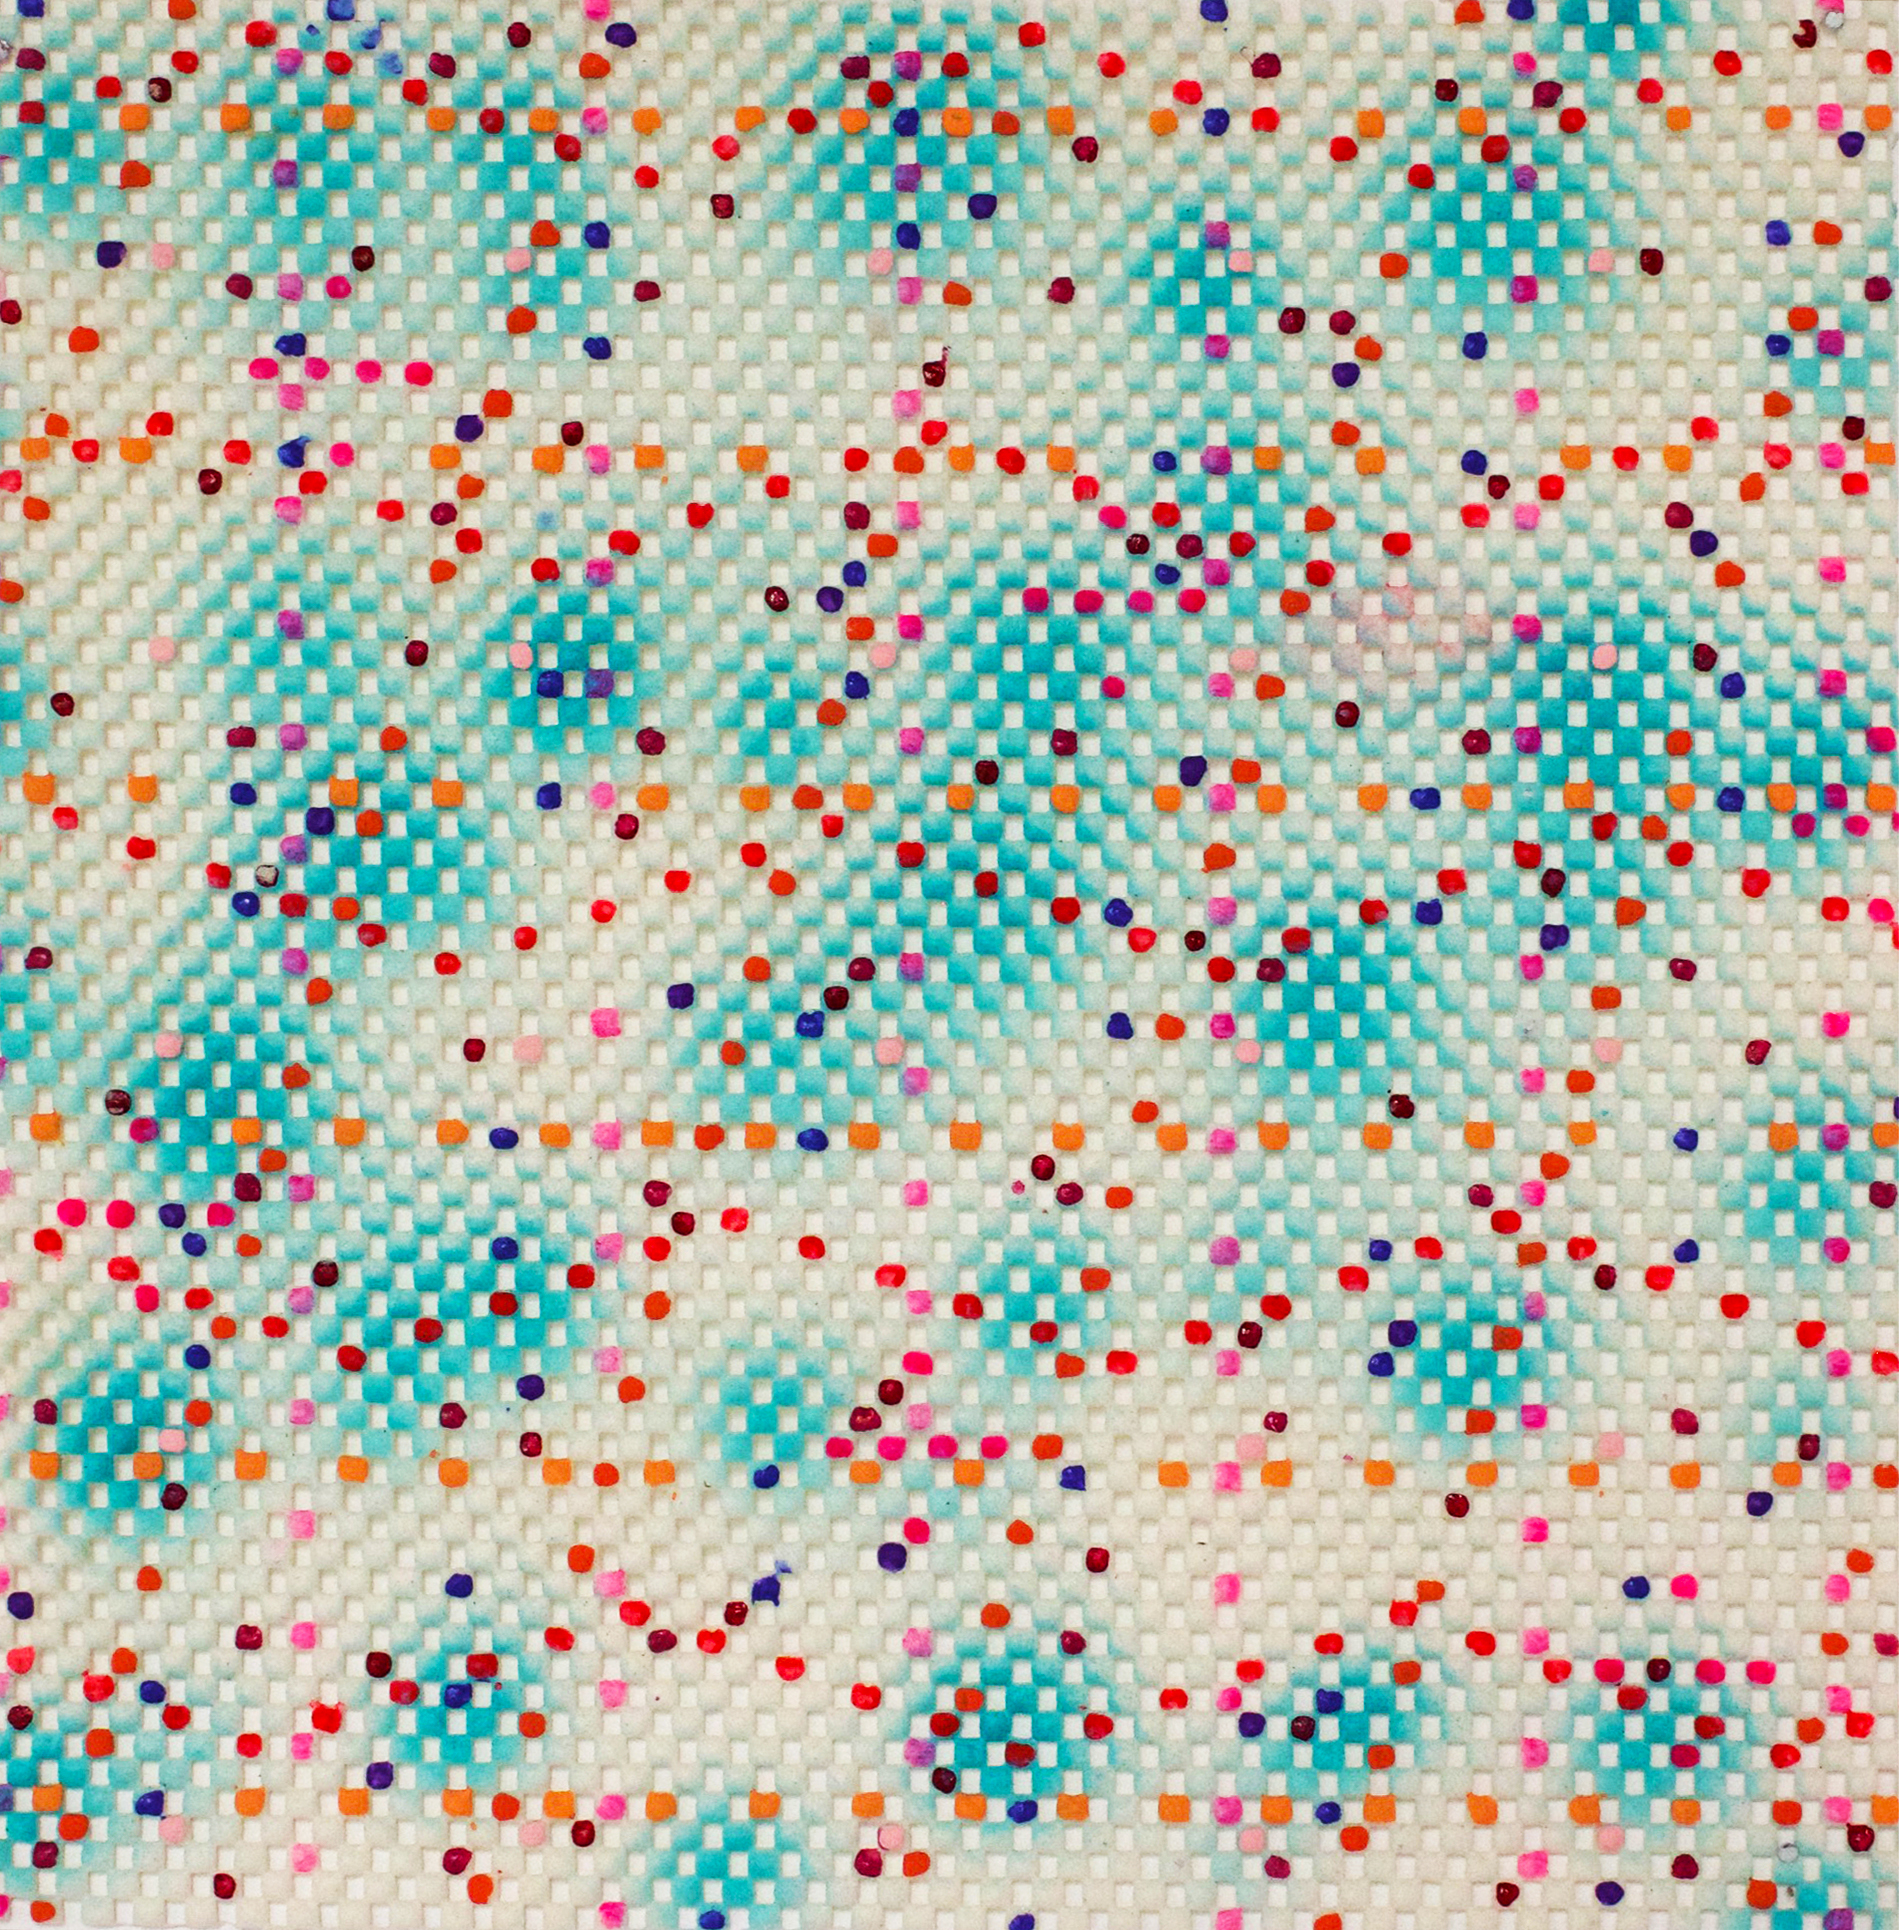   Shimmer   2017  Acrylic on rug pad  11.5” x 11.5” 